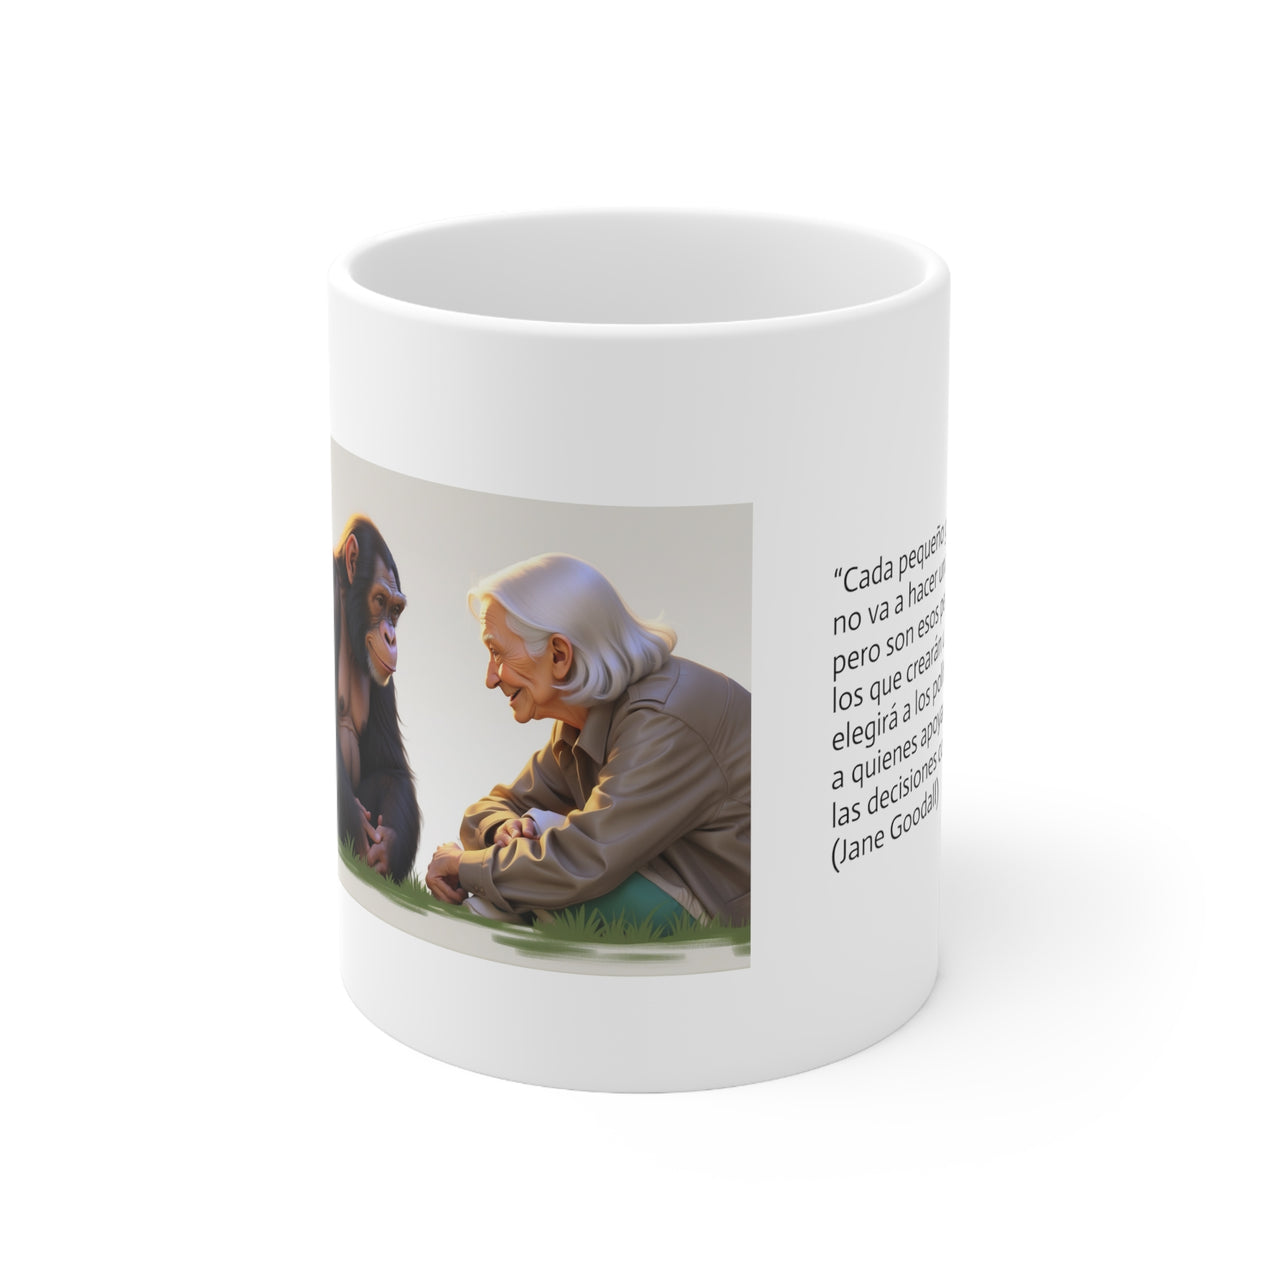 Taza de Jane Goodall, Taza de café, Taza con frase de ciencia, 0.33 l, 0.44 l